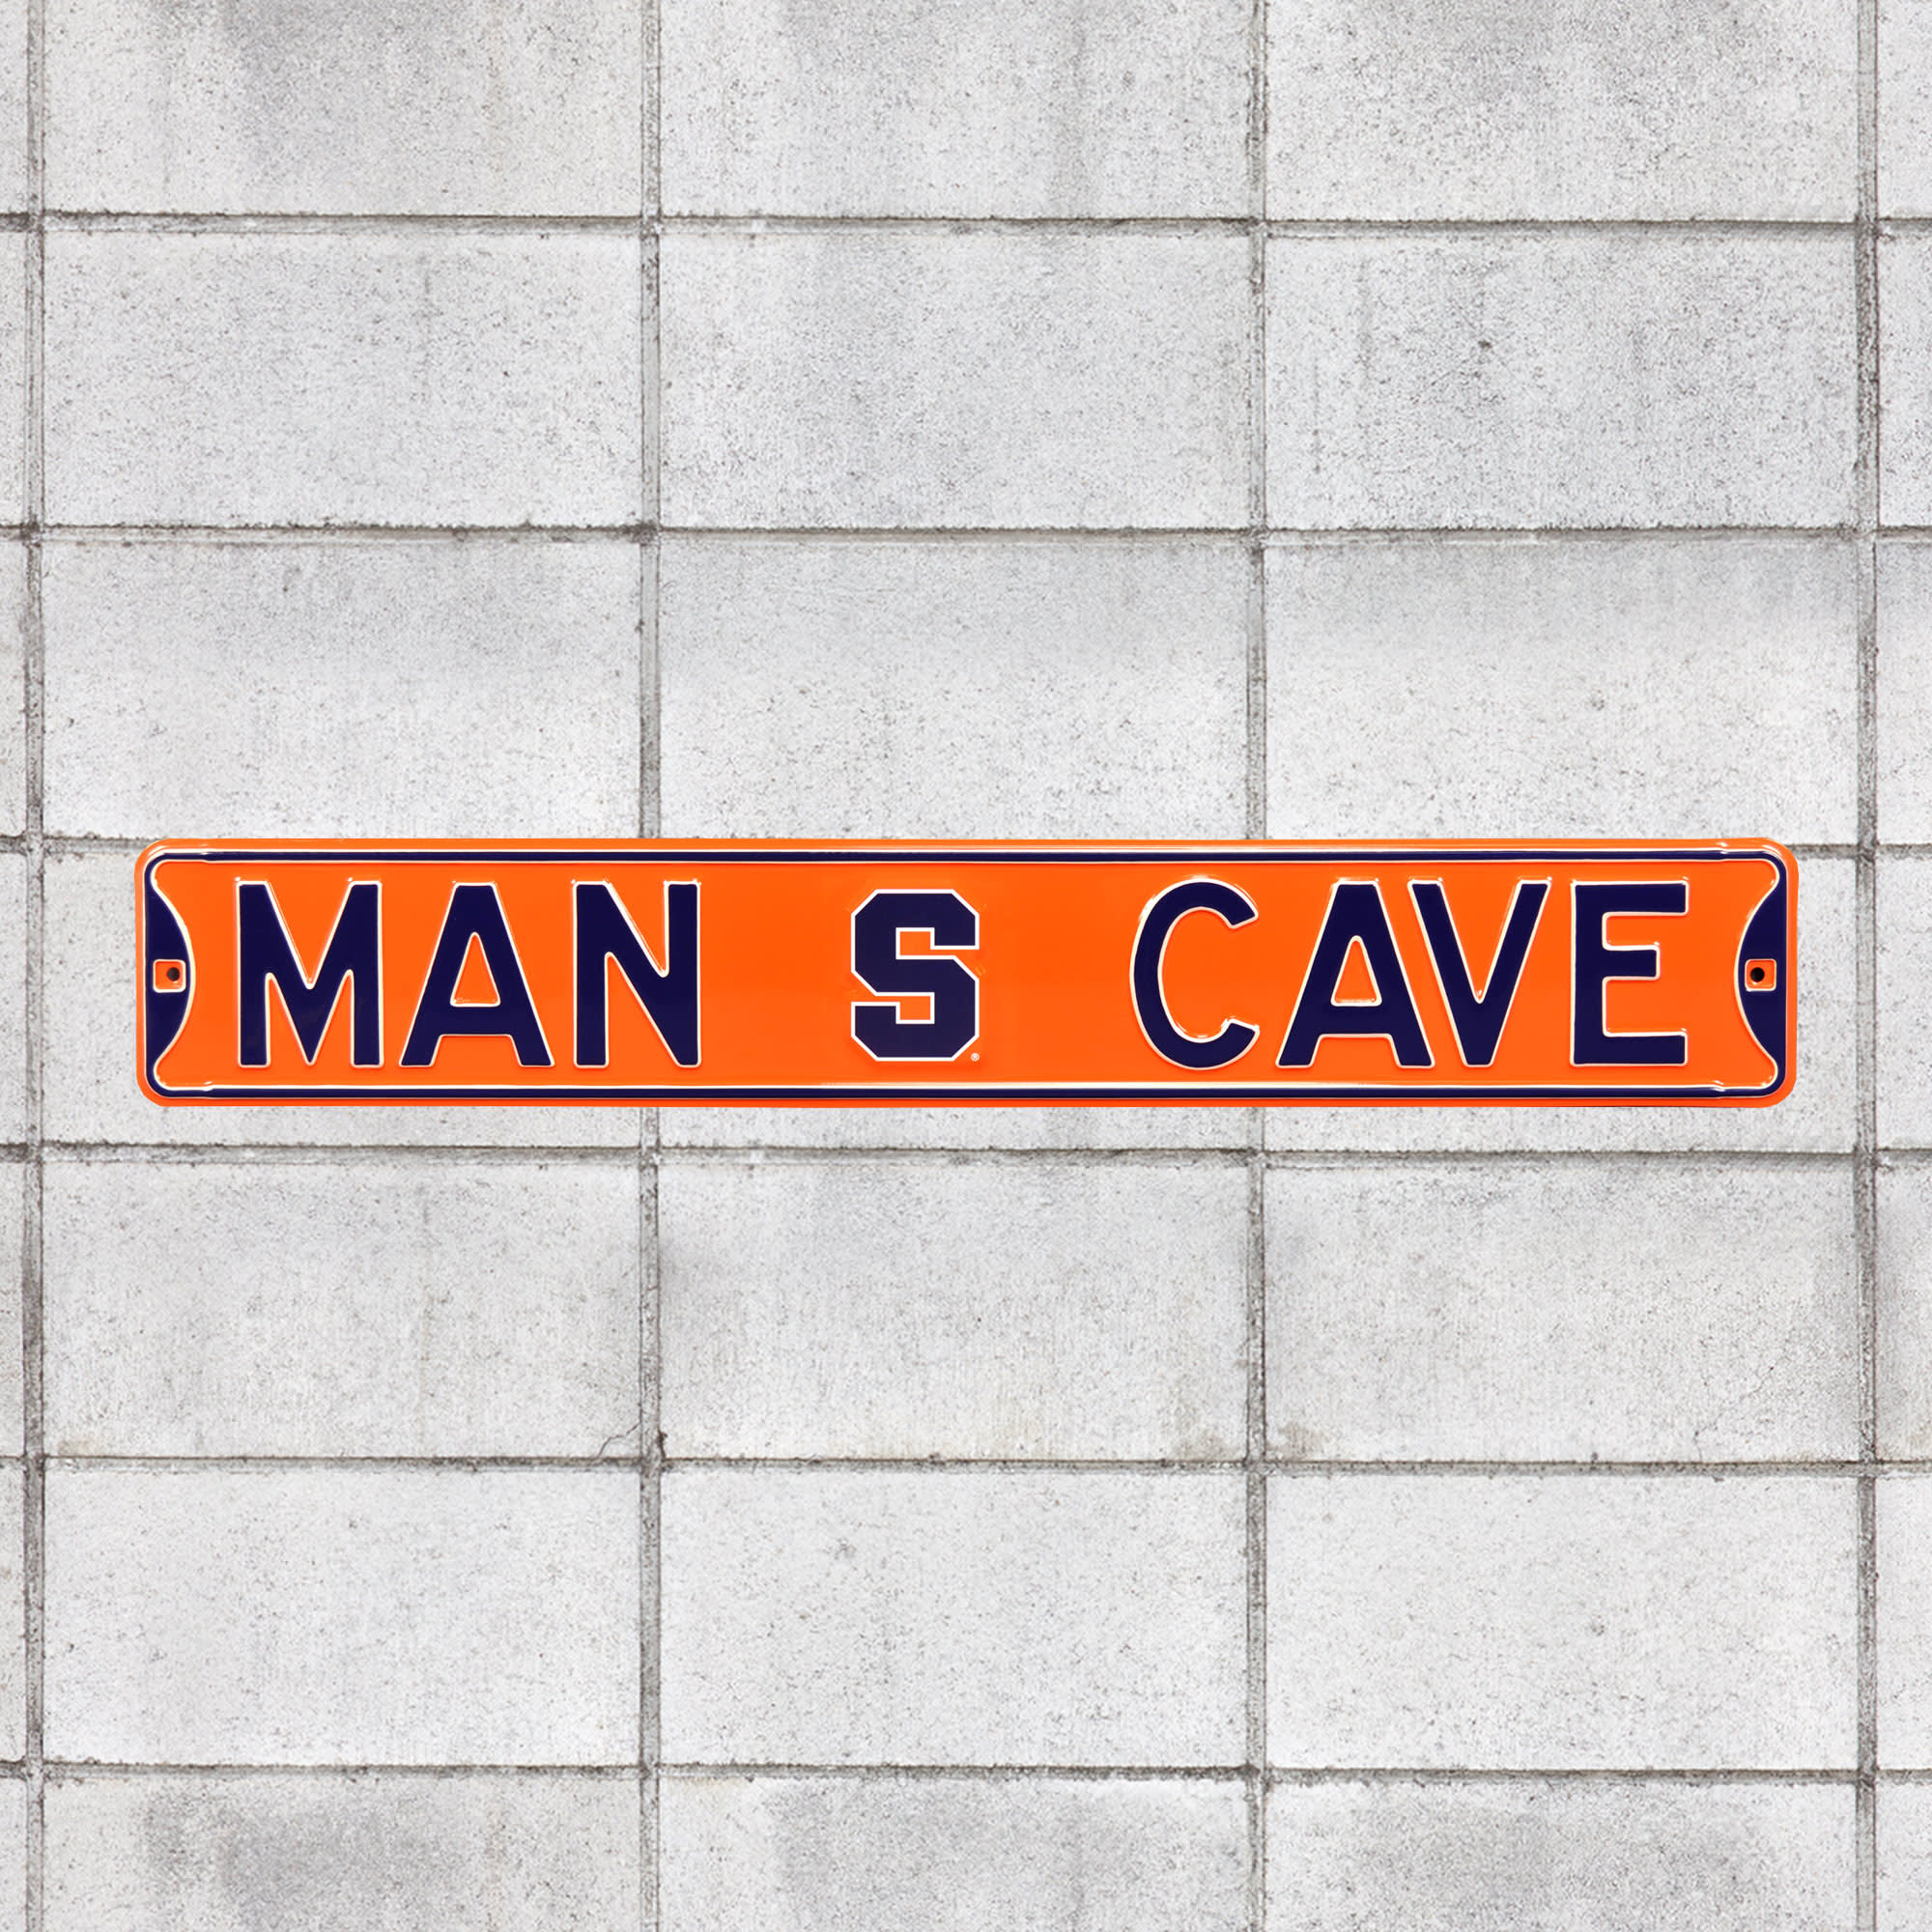 Syracuse Orange for Syracuse Orangemen: Man Cave - Officially Licensed Metal Street Sign 36.0"W x 6.0"H by Fathead | 100% Steel